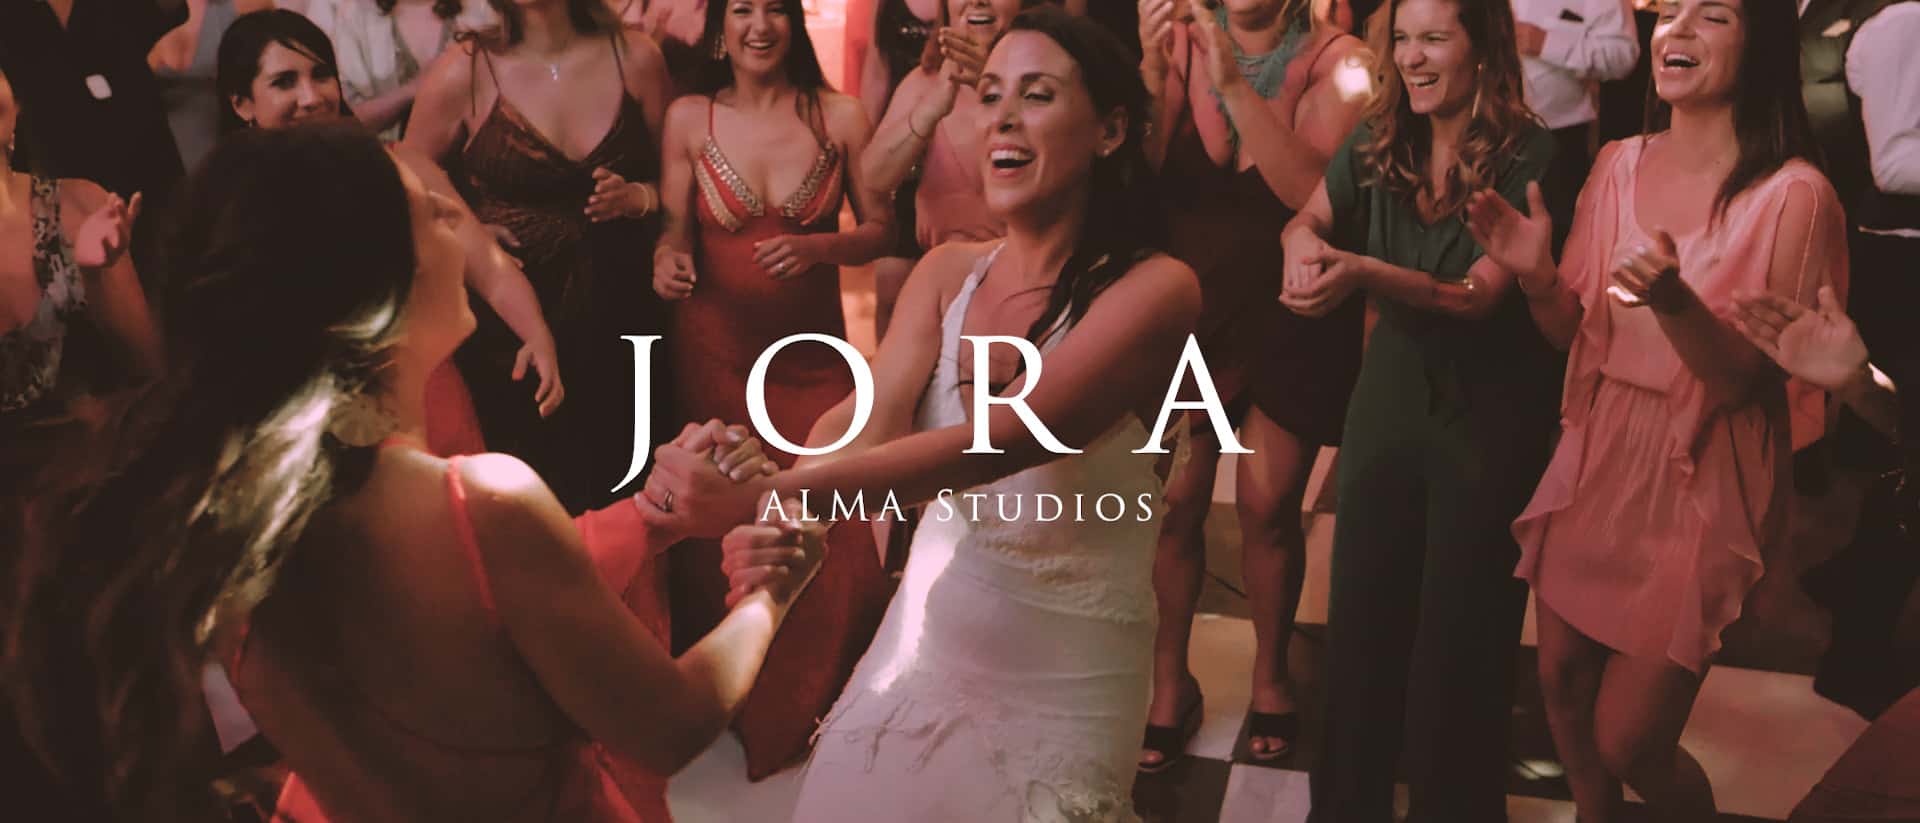 Peliculas de Alma Studios. Jora. Video de Matrimonio. Película. Por ALMA Studios